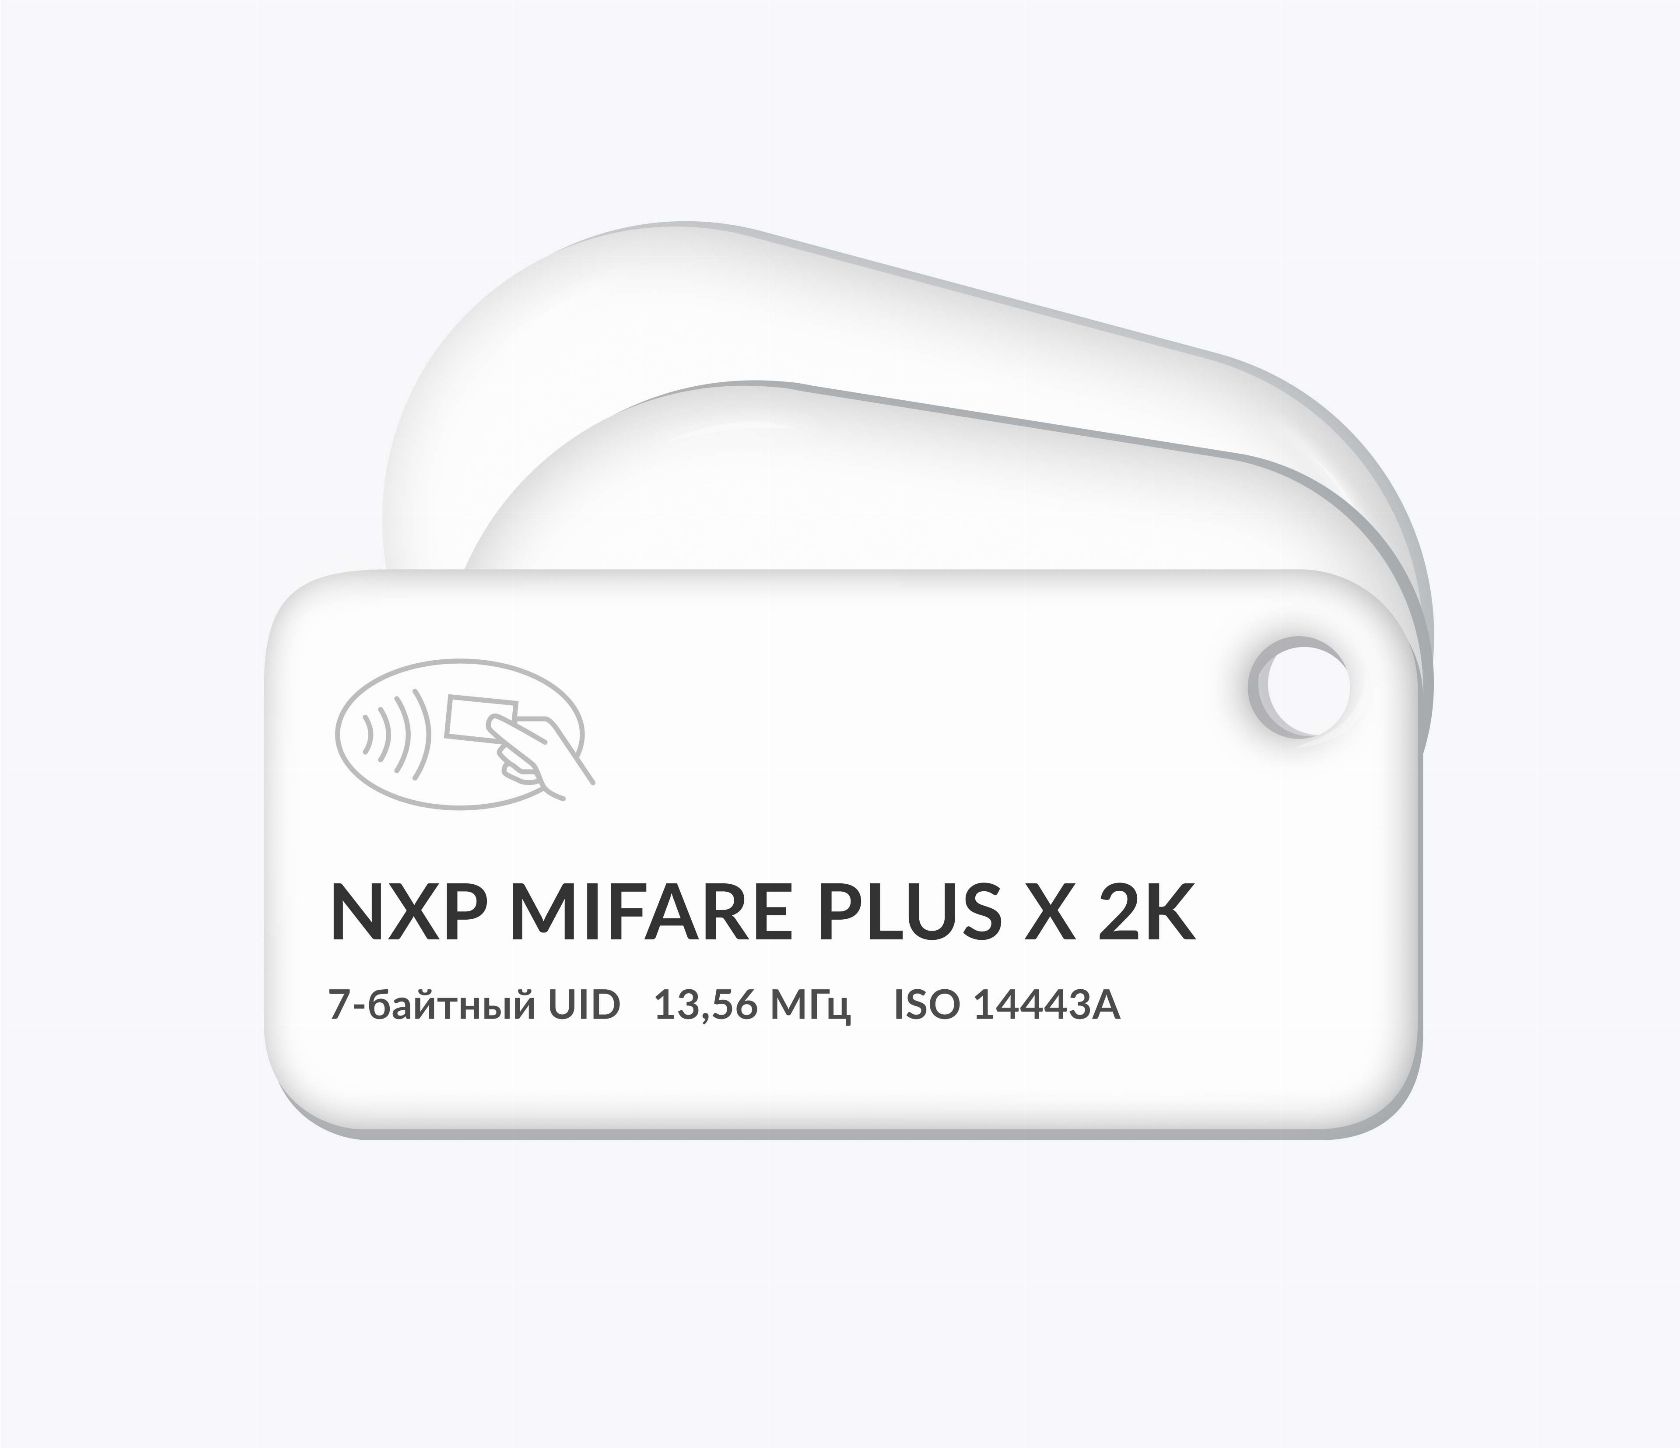 RFID-брелоки NEOKEY® с чипом NXP MIFARE Plus X 2k 7 byte UID и вашим логотипом RFID-брелоки NEOKEY® с чипом NXP MIFARE Plus X 2k 7 byte UID и вашим логотипом